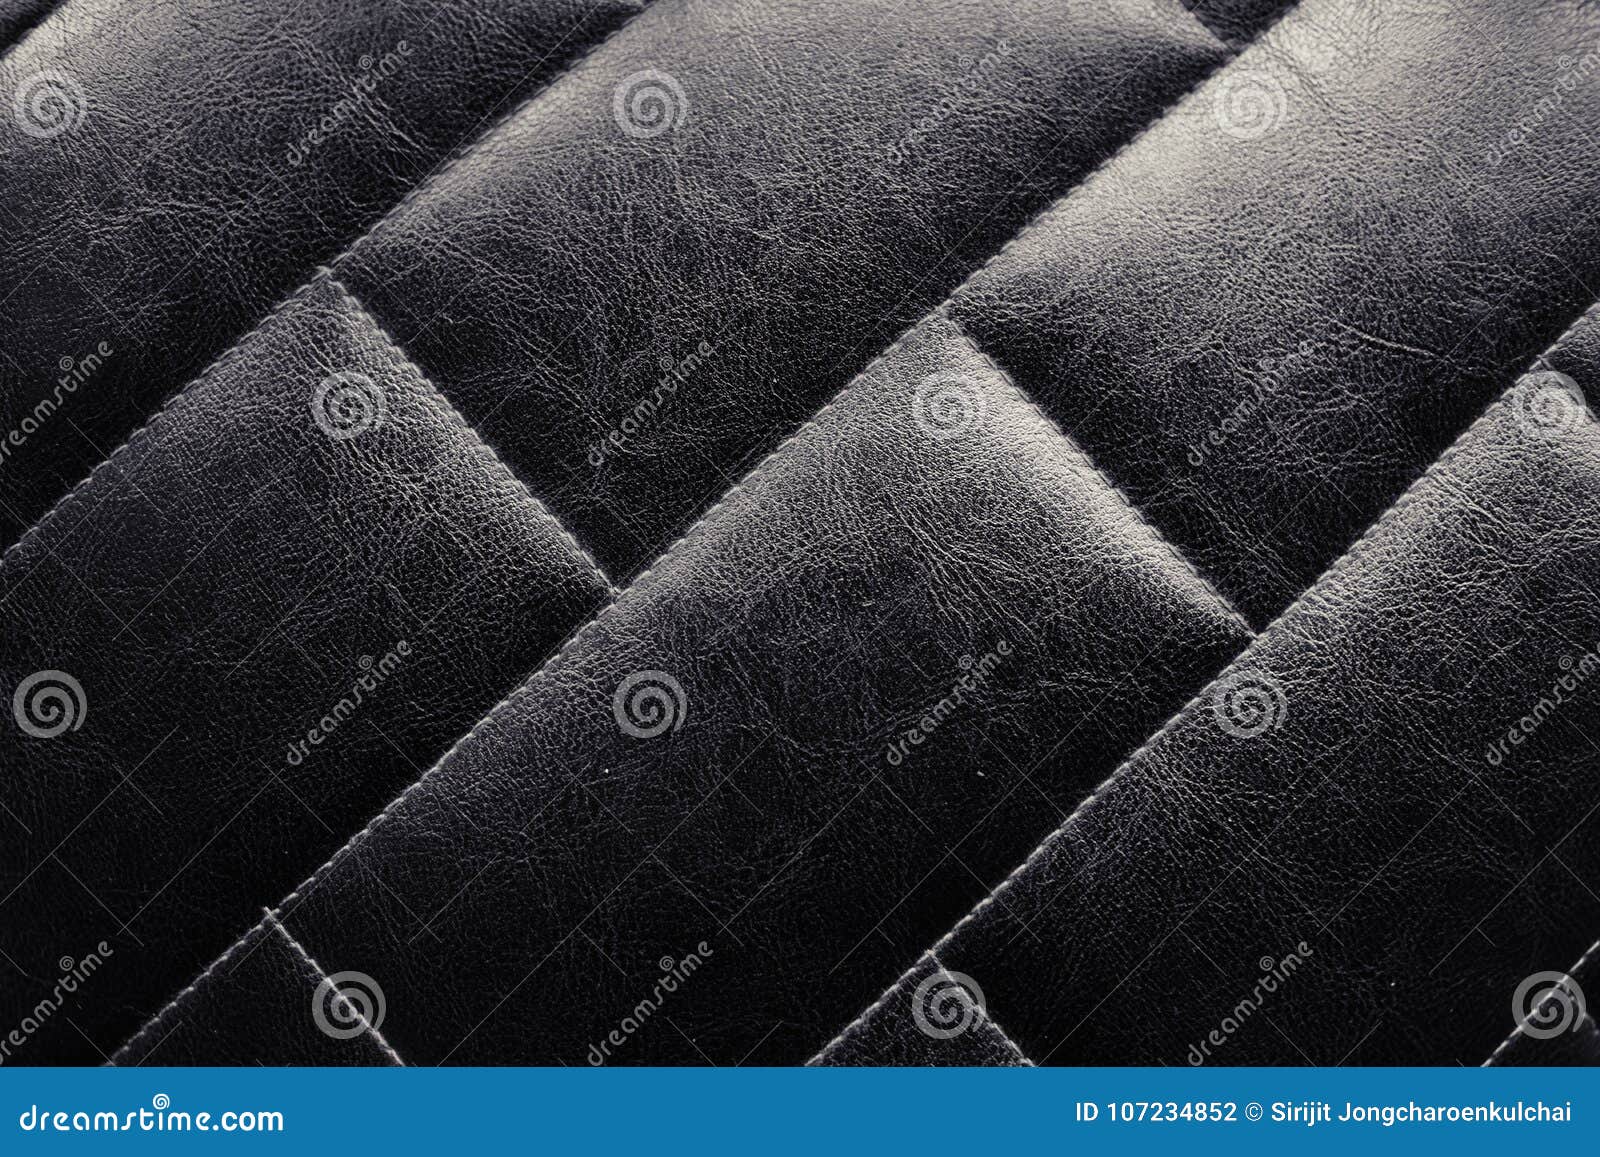 Black Leather Sofa Texture Background Stock Photo Image Of Grain